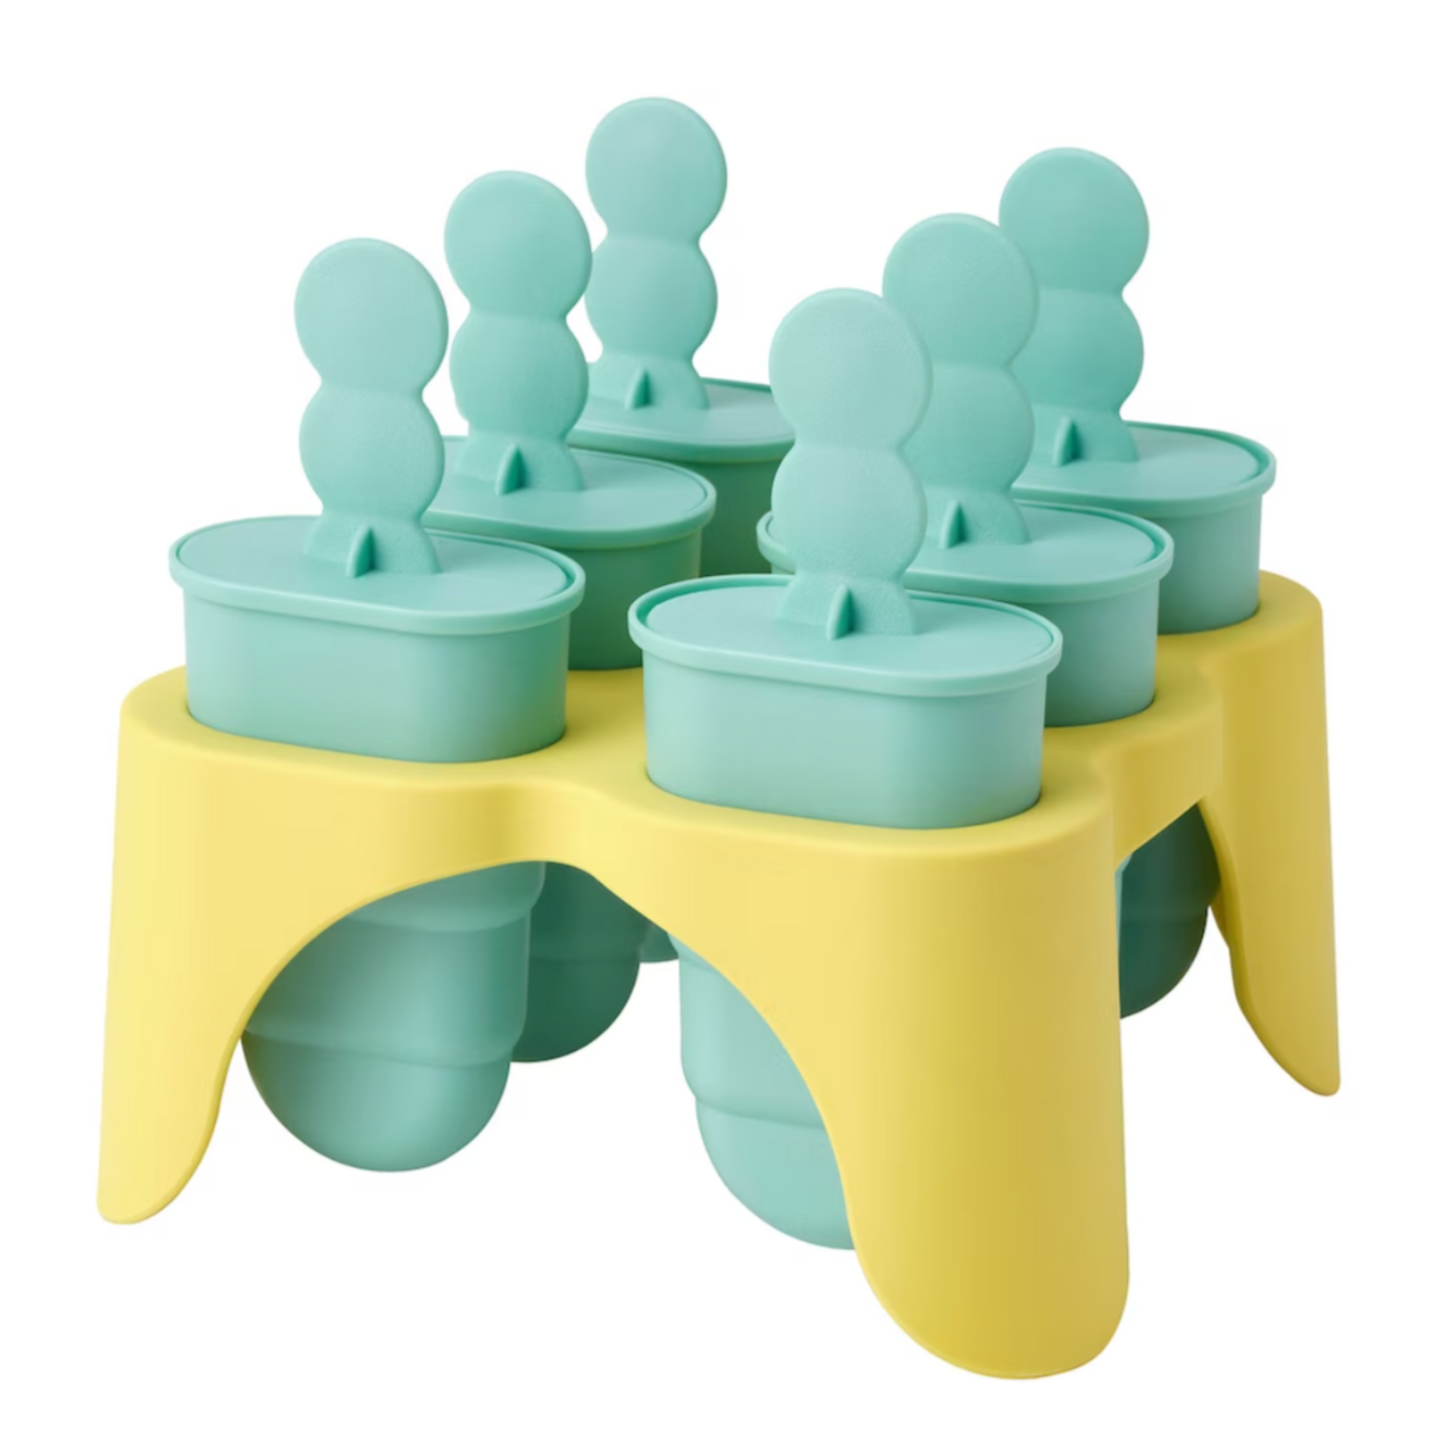 Ikea Uppfylld Ice Lolly Maker, Turquoise/Yellow, 6-Pack (8854603464991)